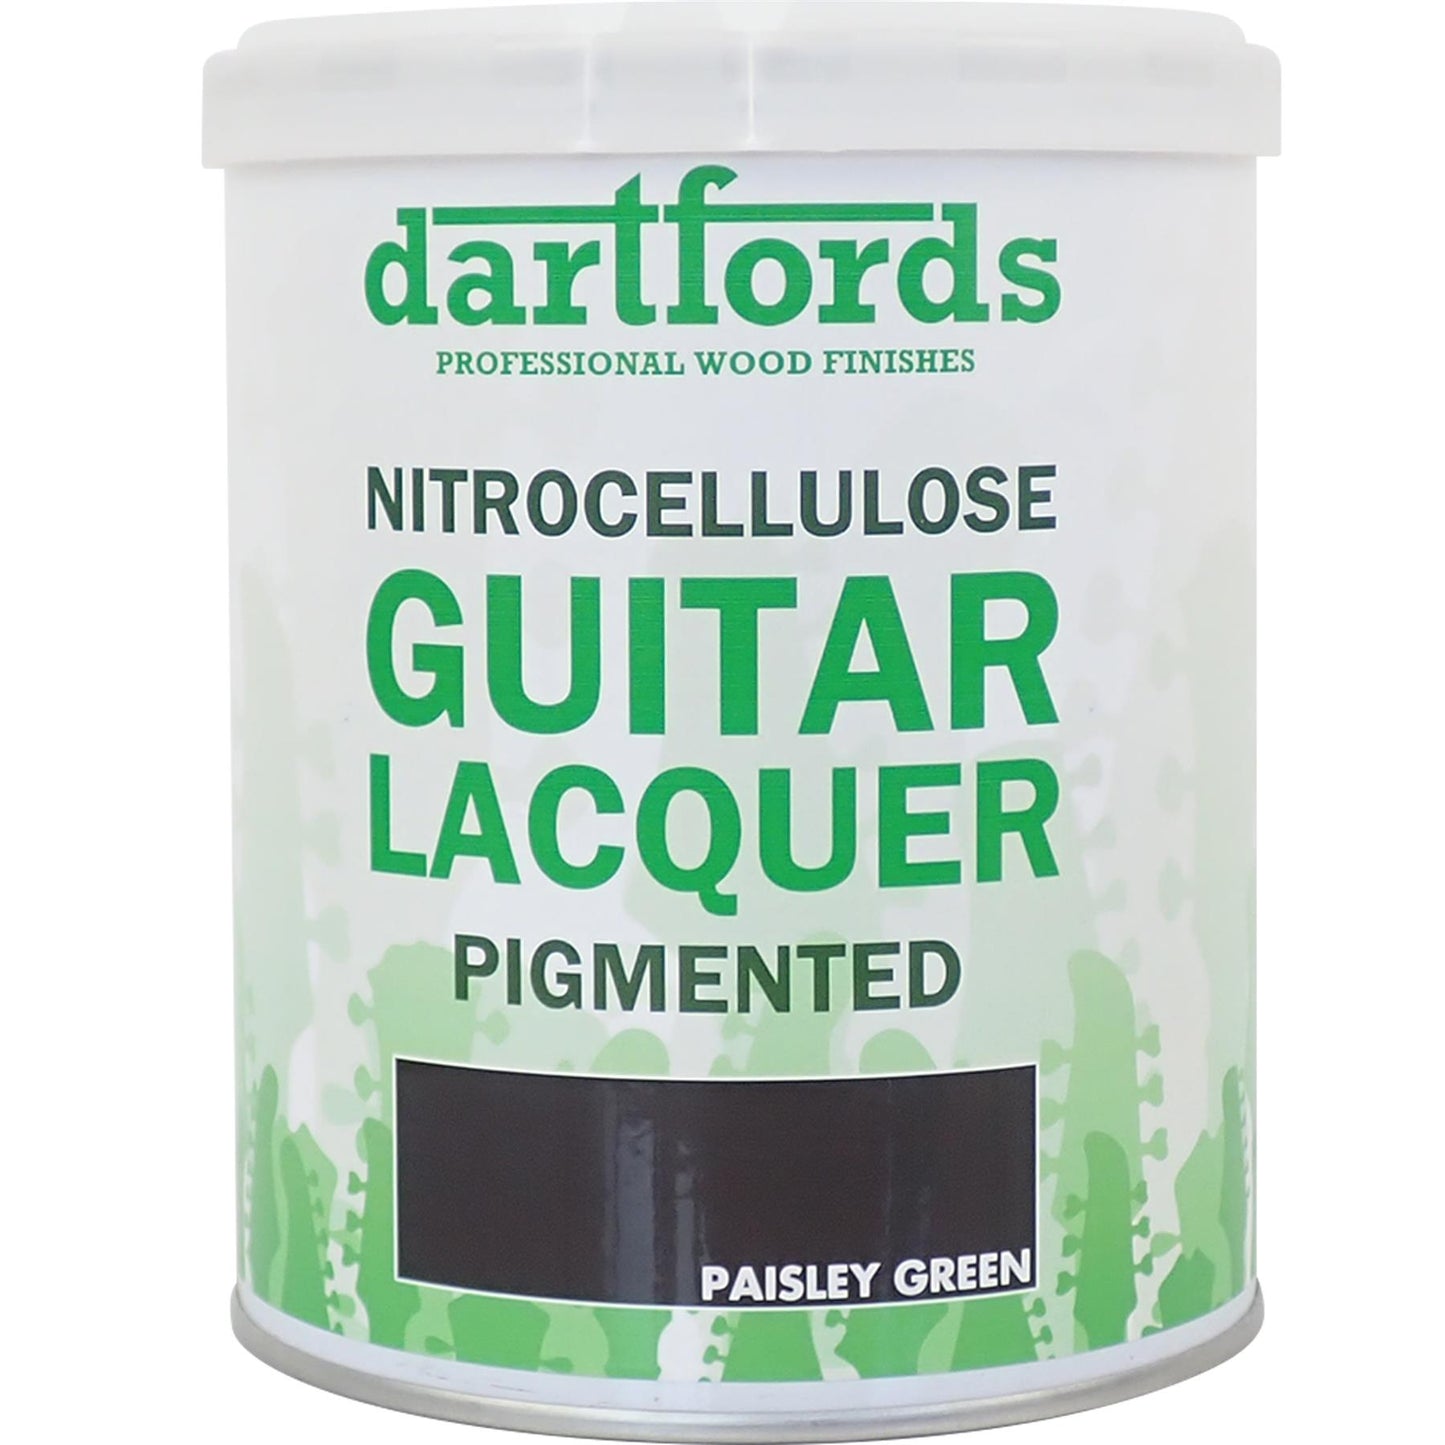 dartfords Paisley Green Pigmented Nitrocellulose Guitar Lacquer 1 litre Tin